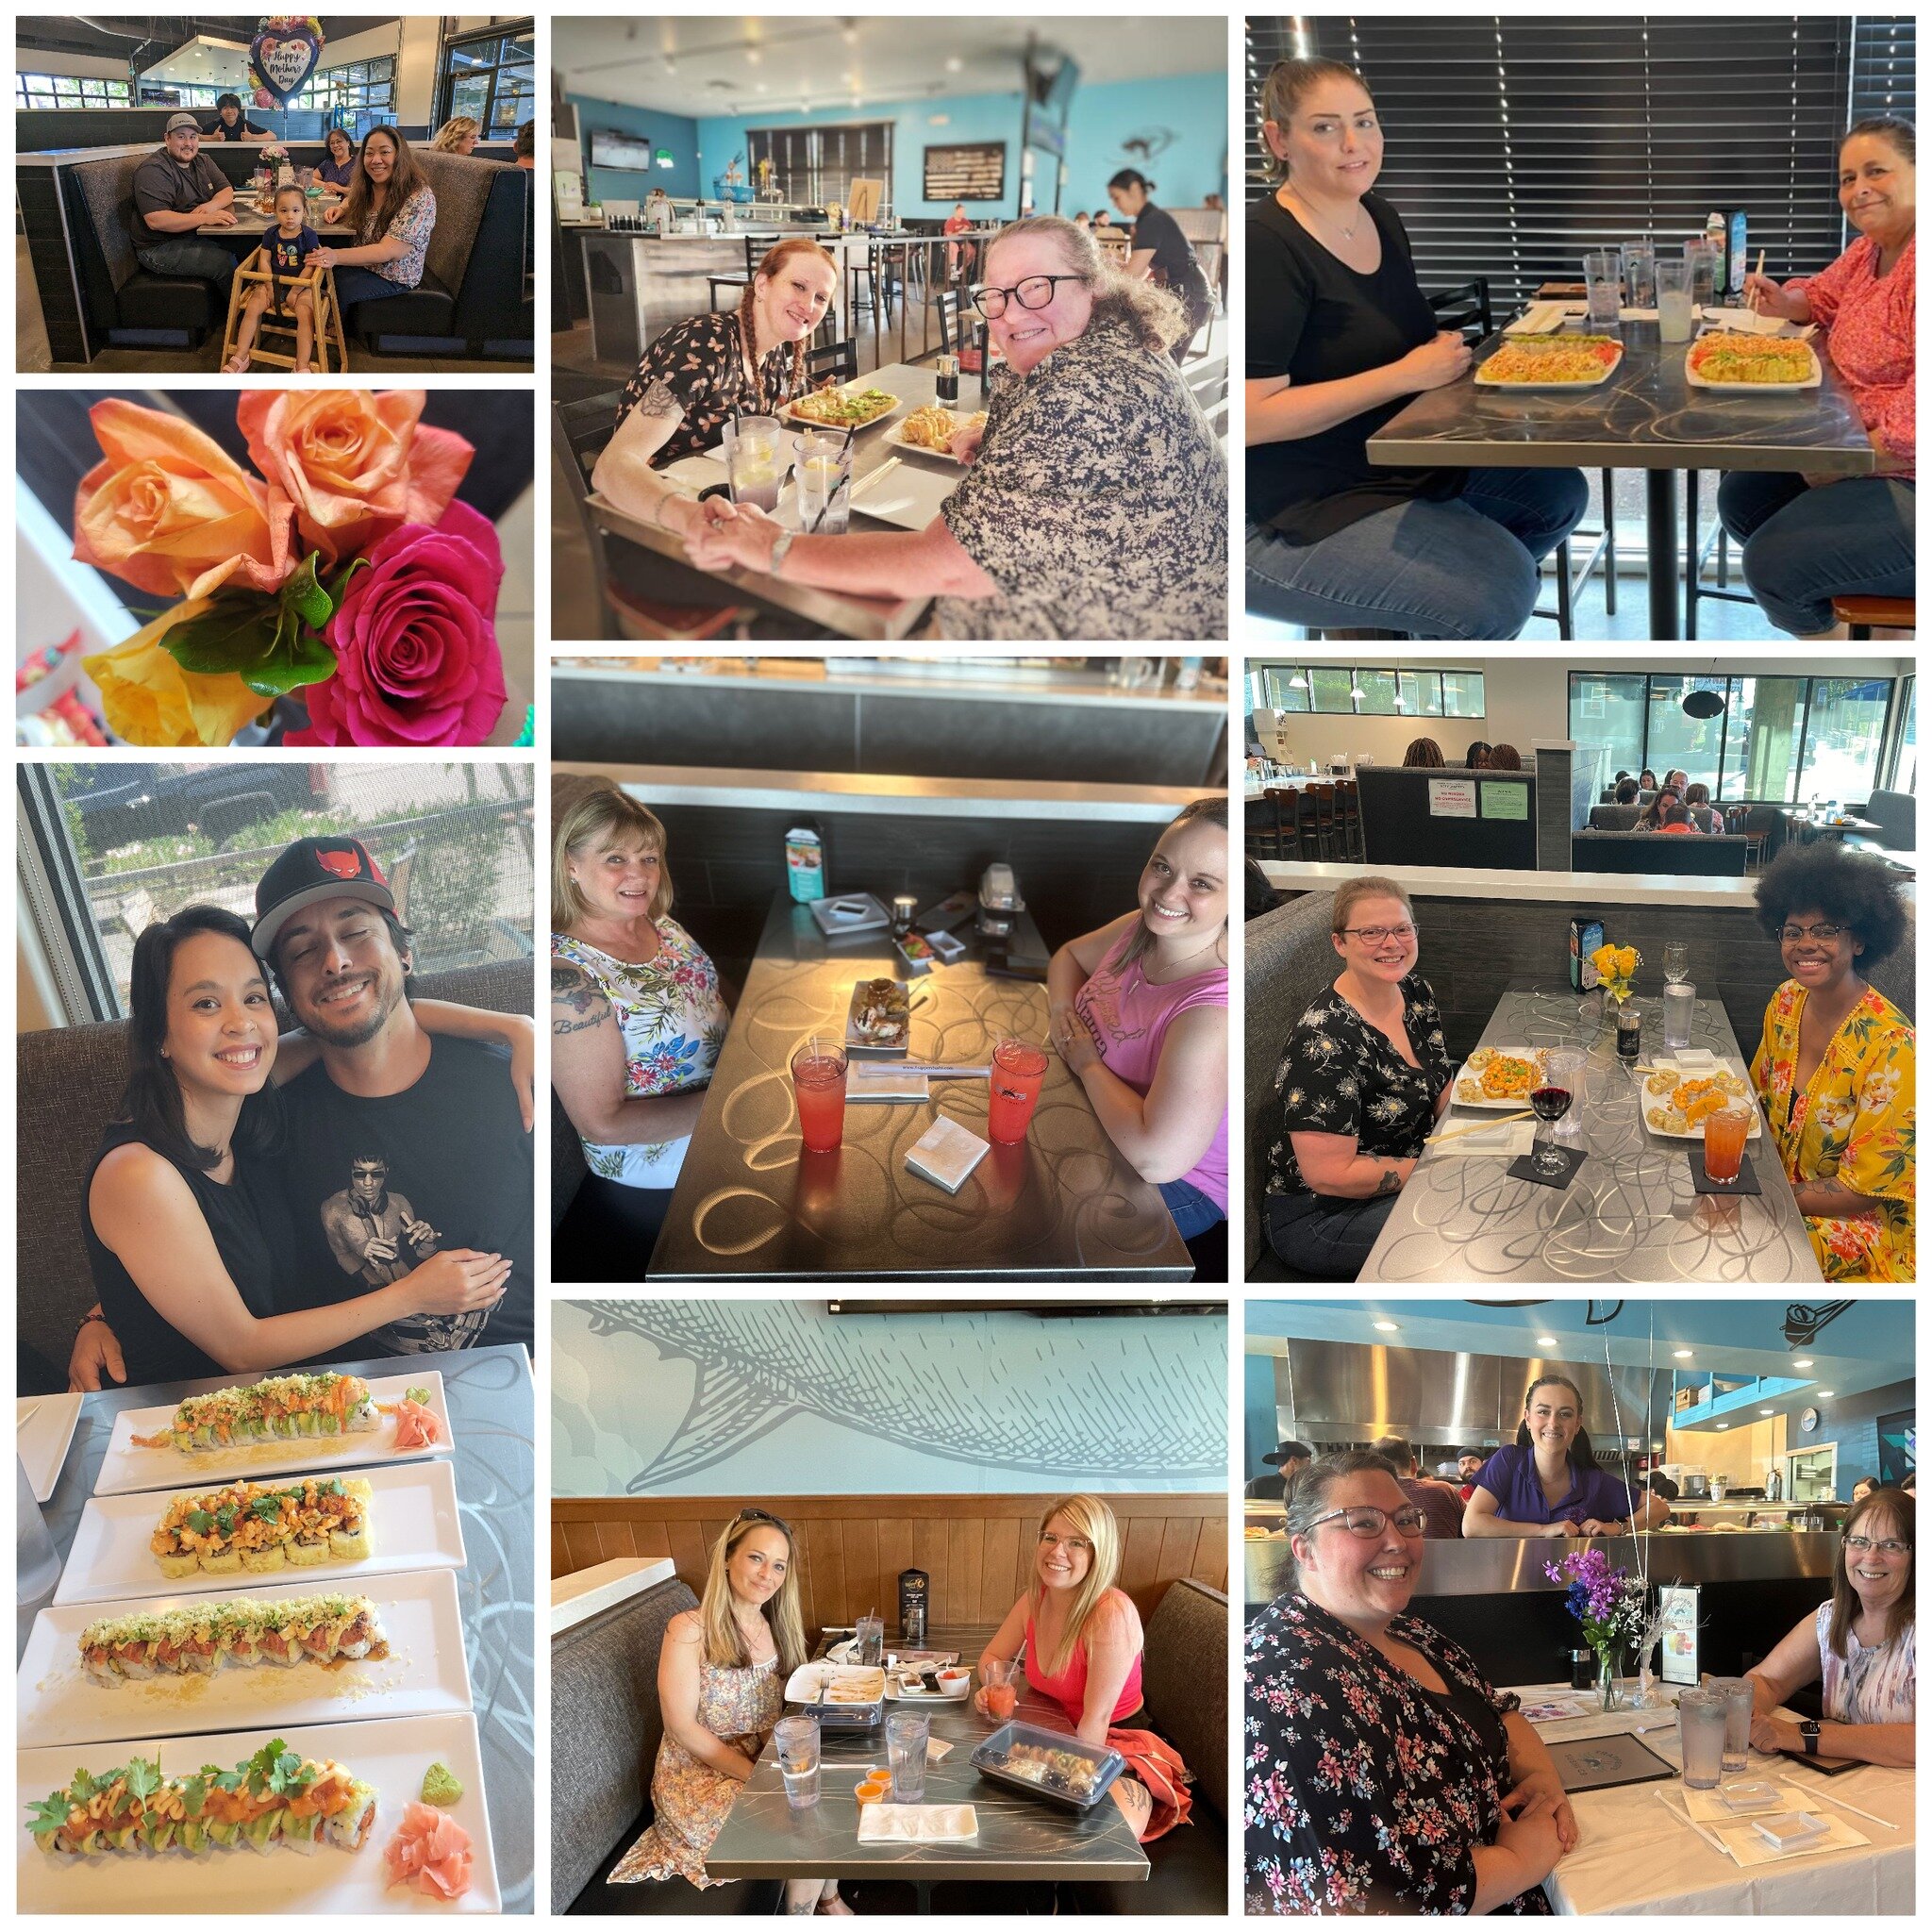 💐 Moms are the best 👸
📸: Trapper's locations across America
.
.
.
.
.
.
.
.
.
.
#sushi #foodporn #seattle #arizona #yum #eats #bestfoodseattle #azeats #grubnchill #sushilovers #sushiporn #sushitime #sushiroll #sushirolls #fox10phoenix #avondaleaz 